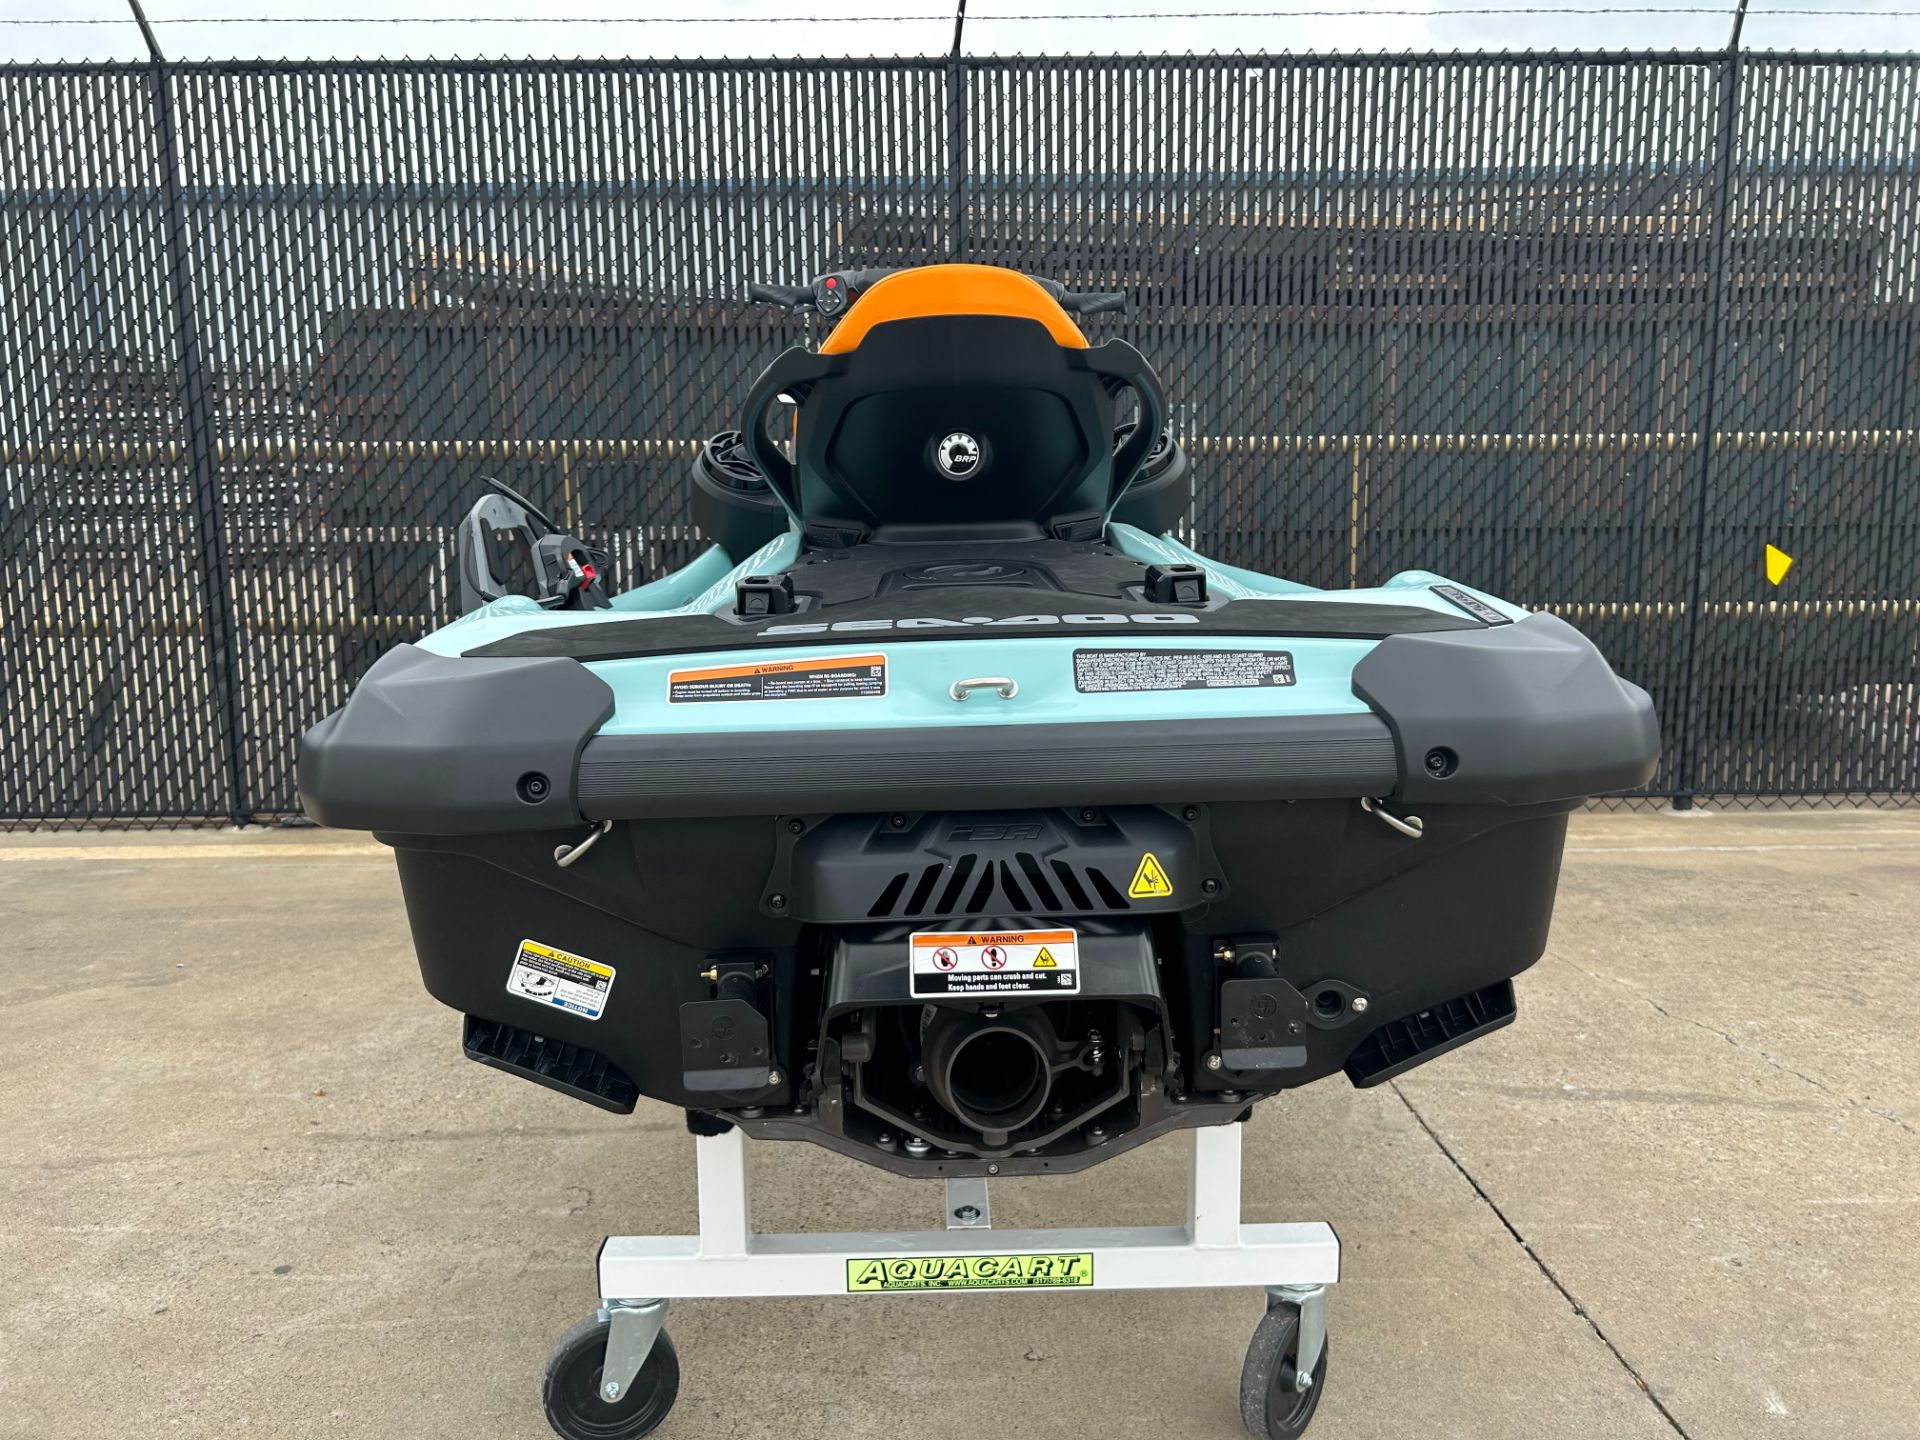 2023 Sea-Doo Wake 170 iBR + Sound System in Greenville, Texas - Photo 4